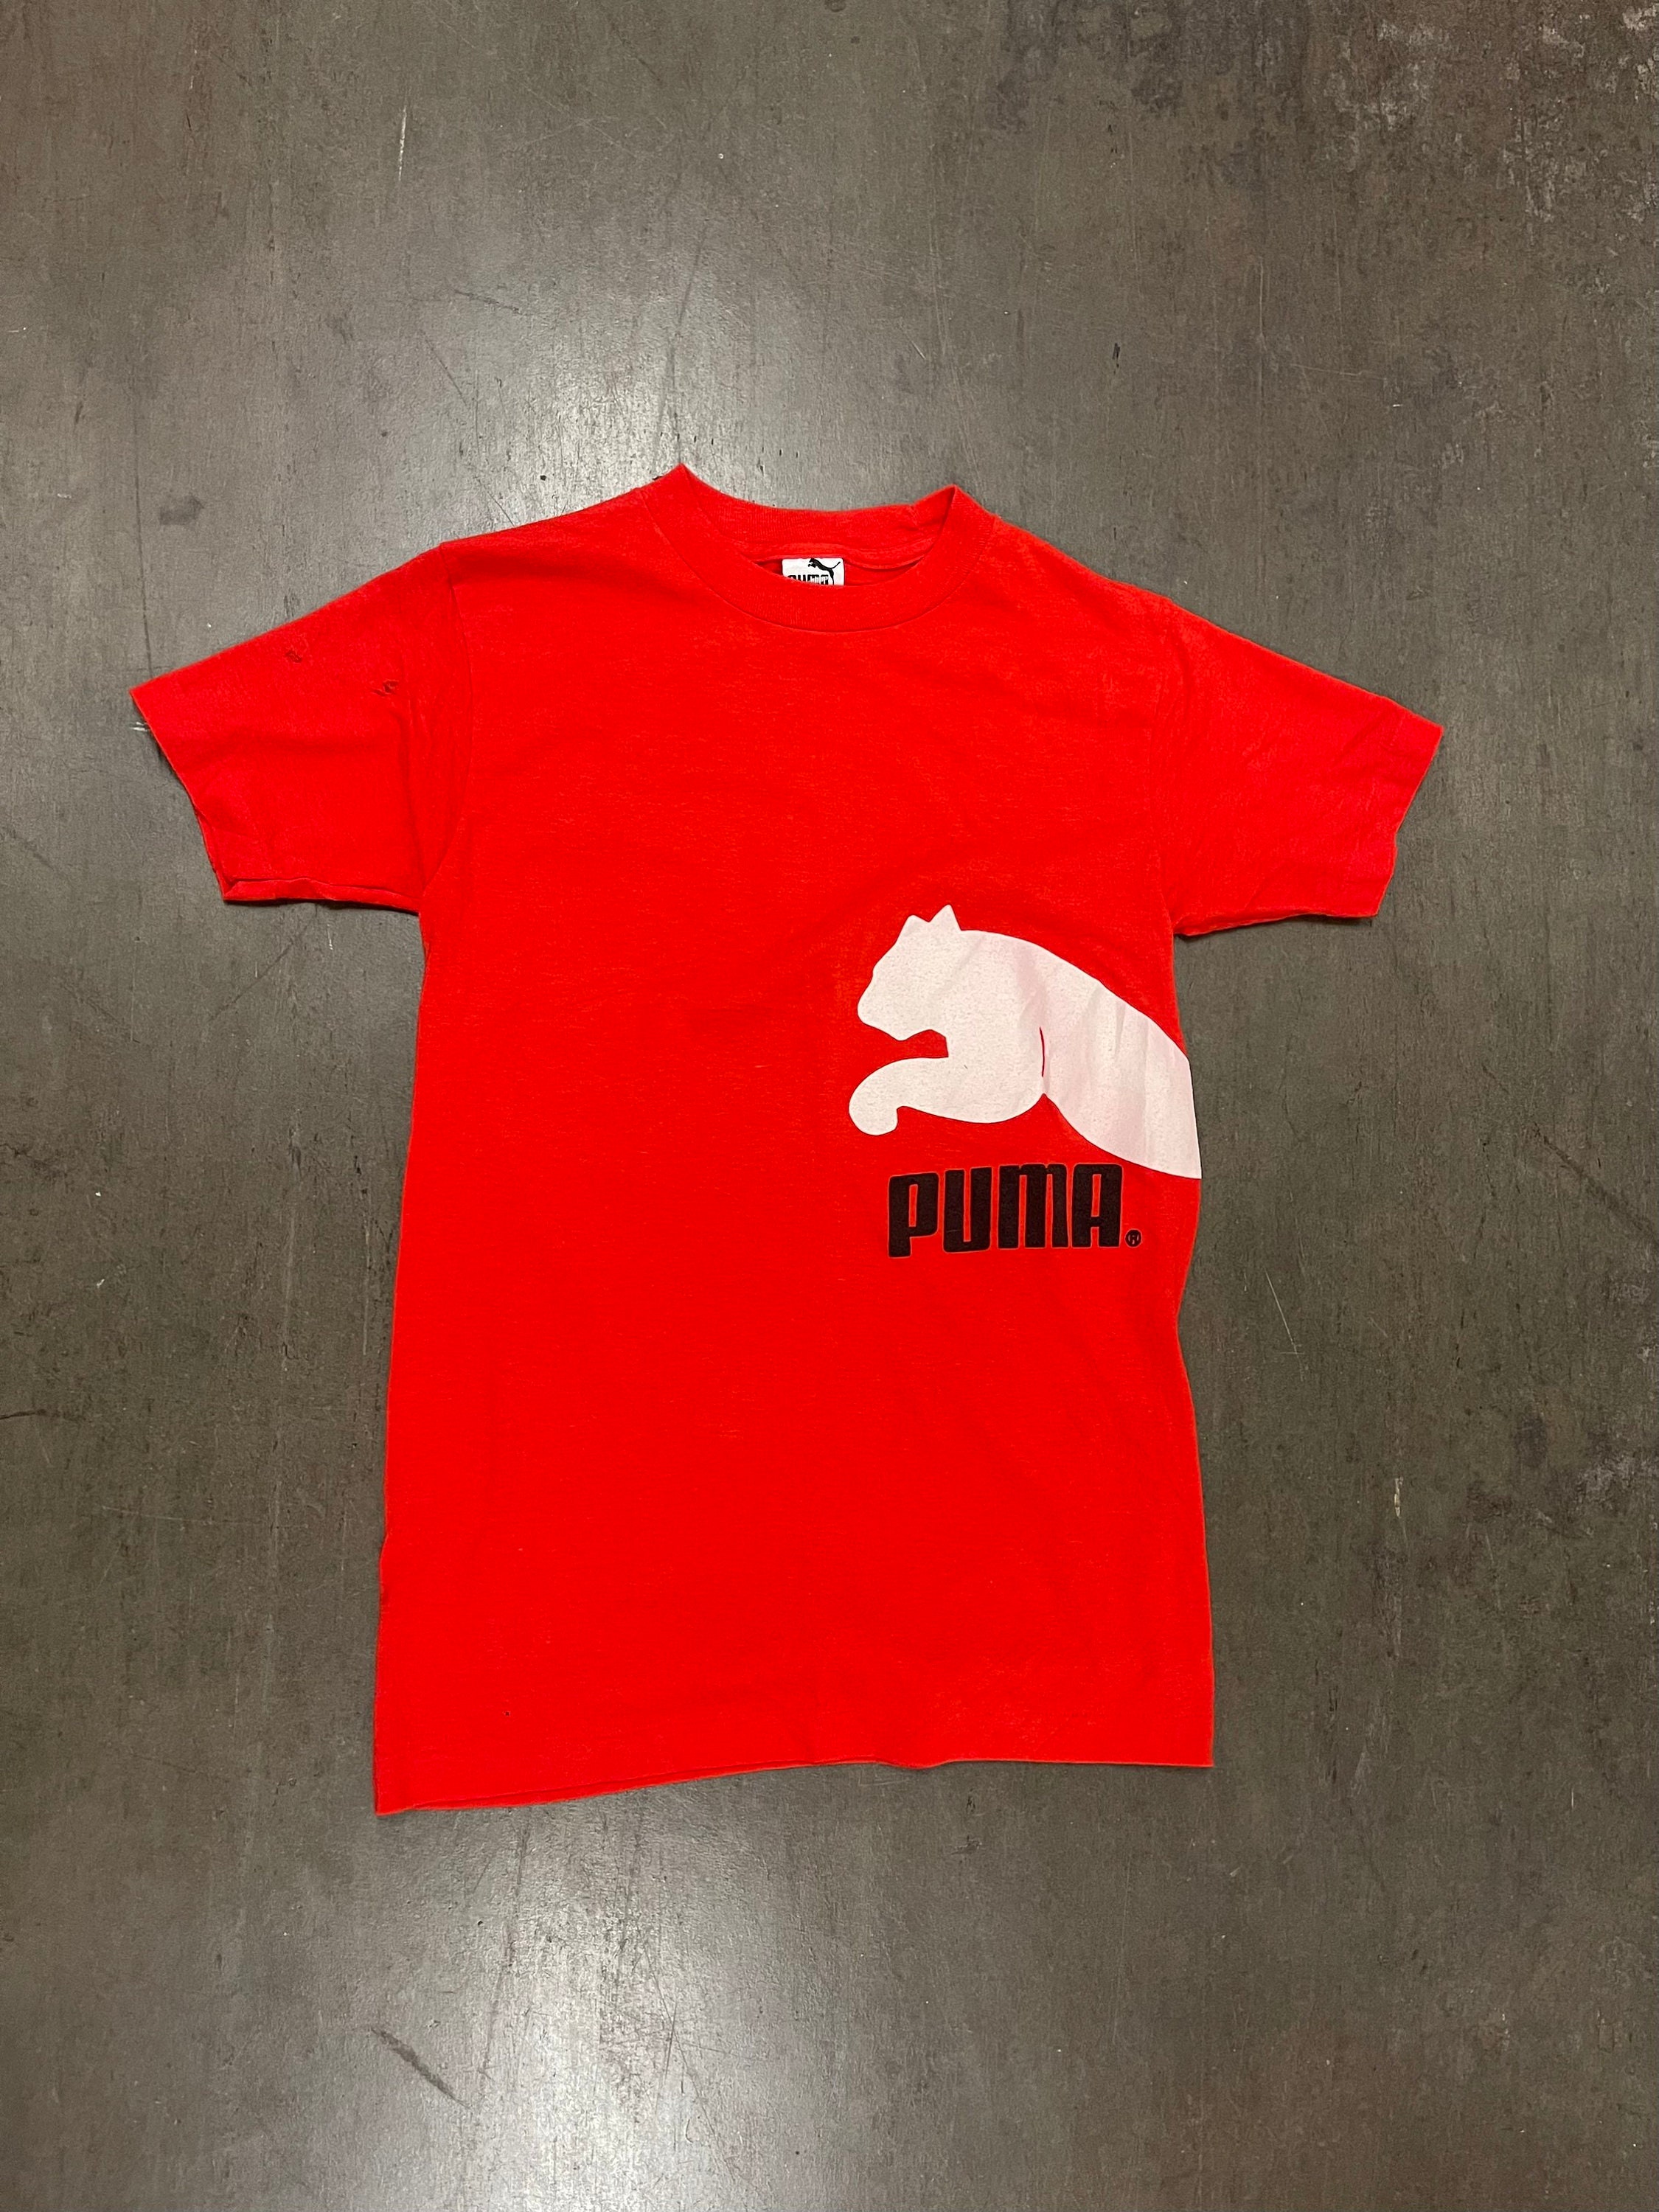 Puma T Shirt - Etsy